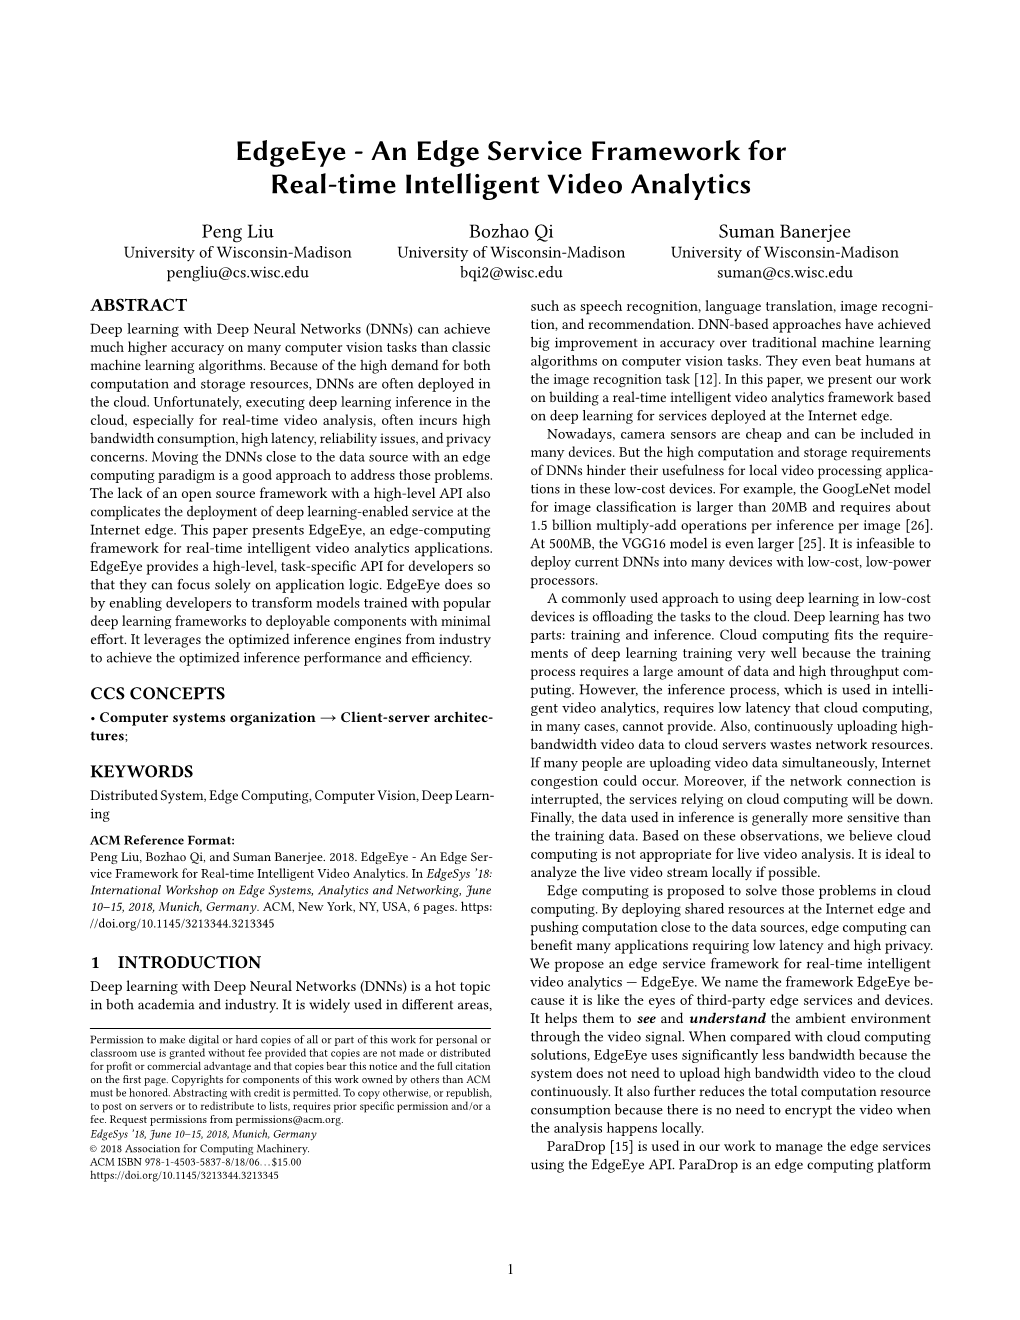 Edgeeye - an Edge Service Framework for Real-Time Intelligent Video Analytics